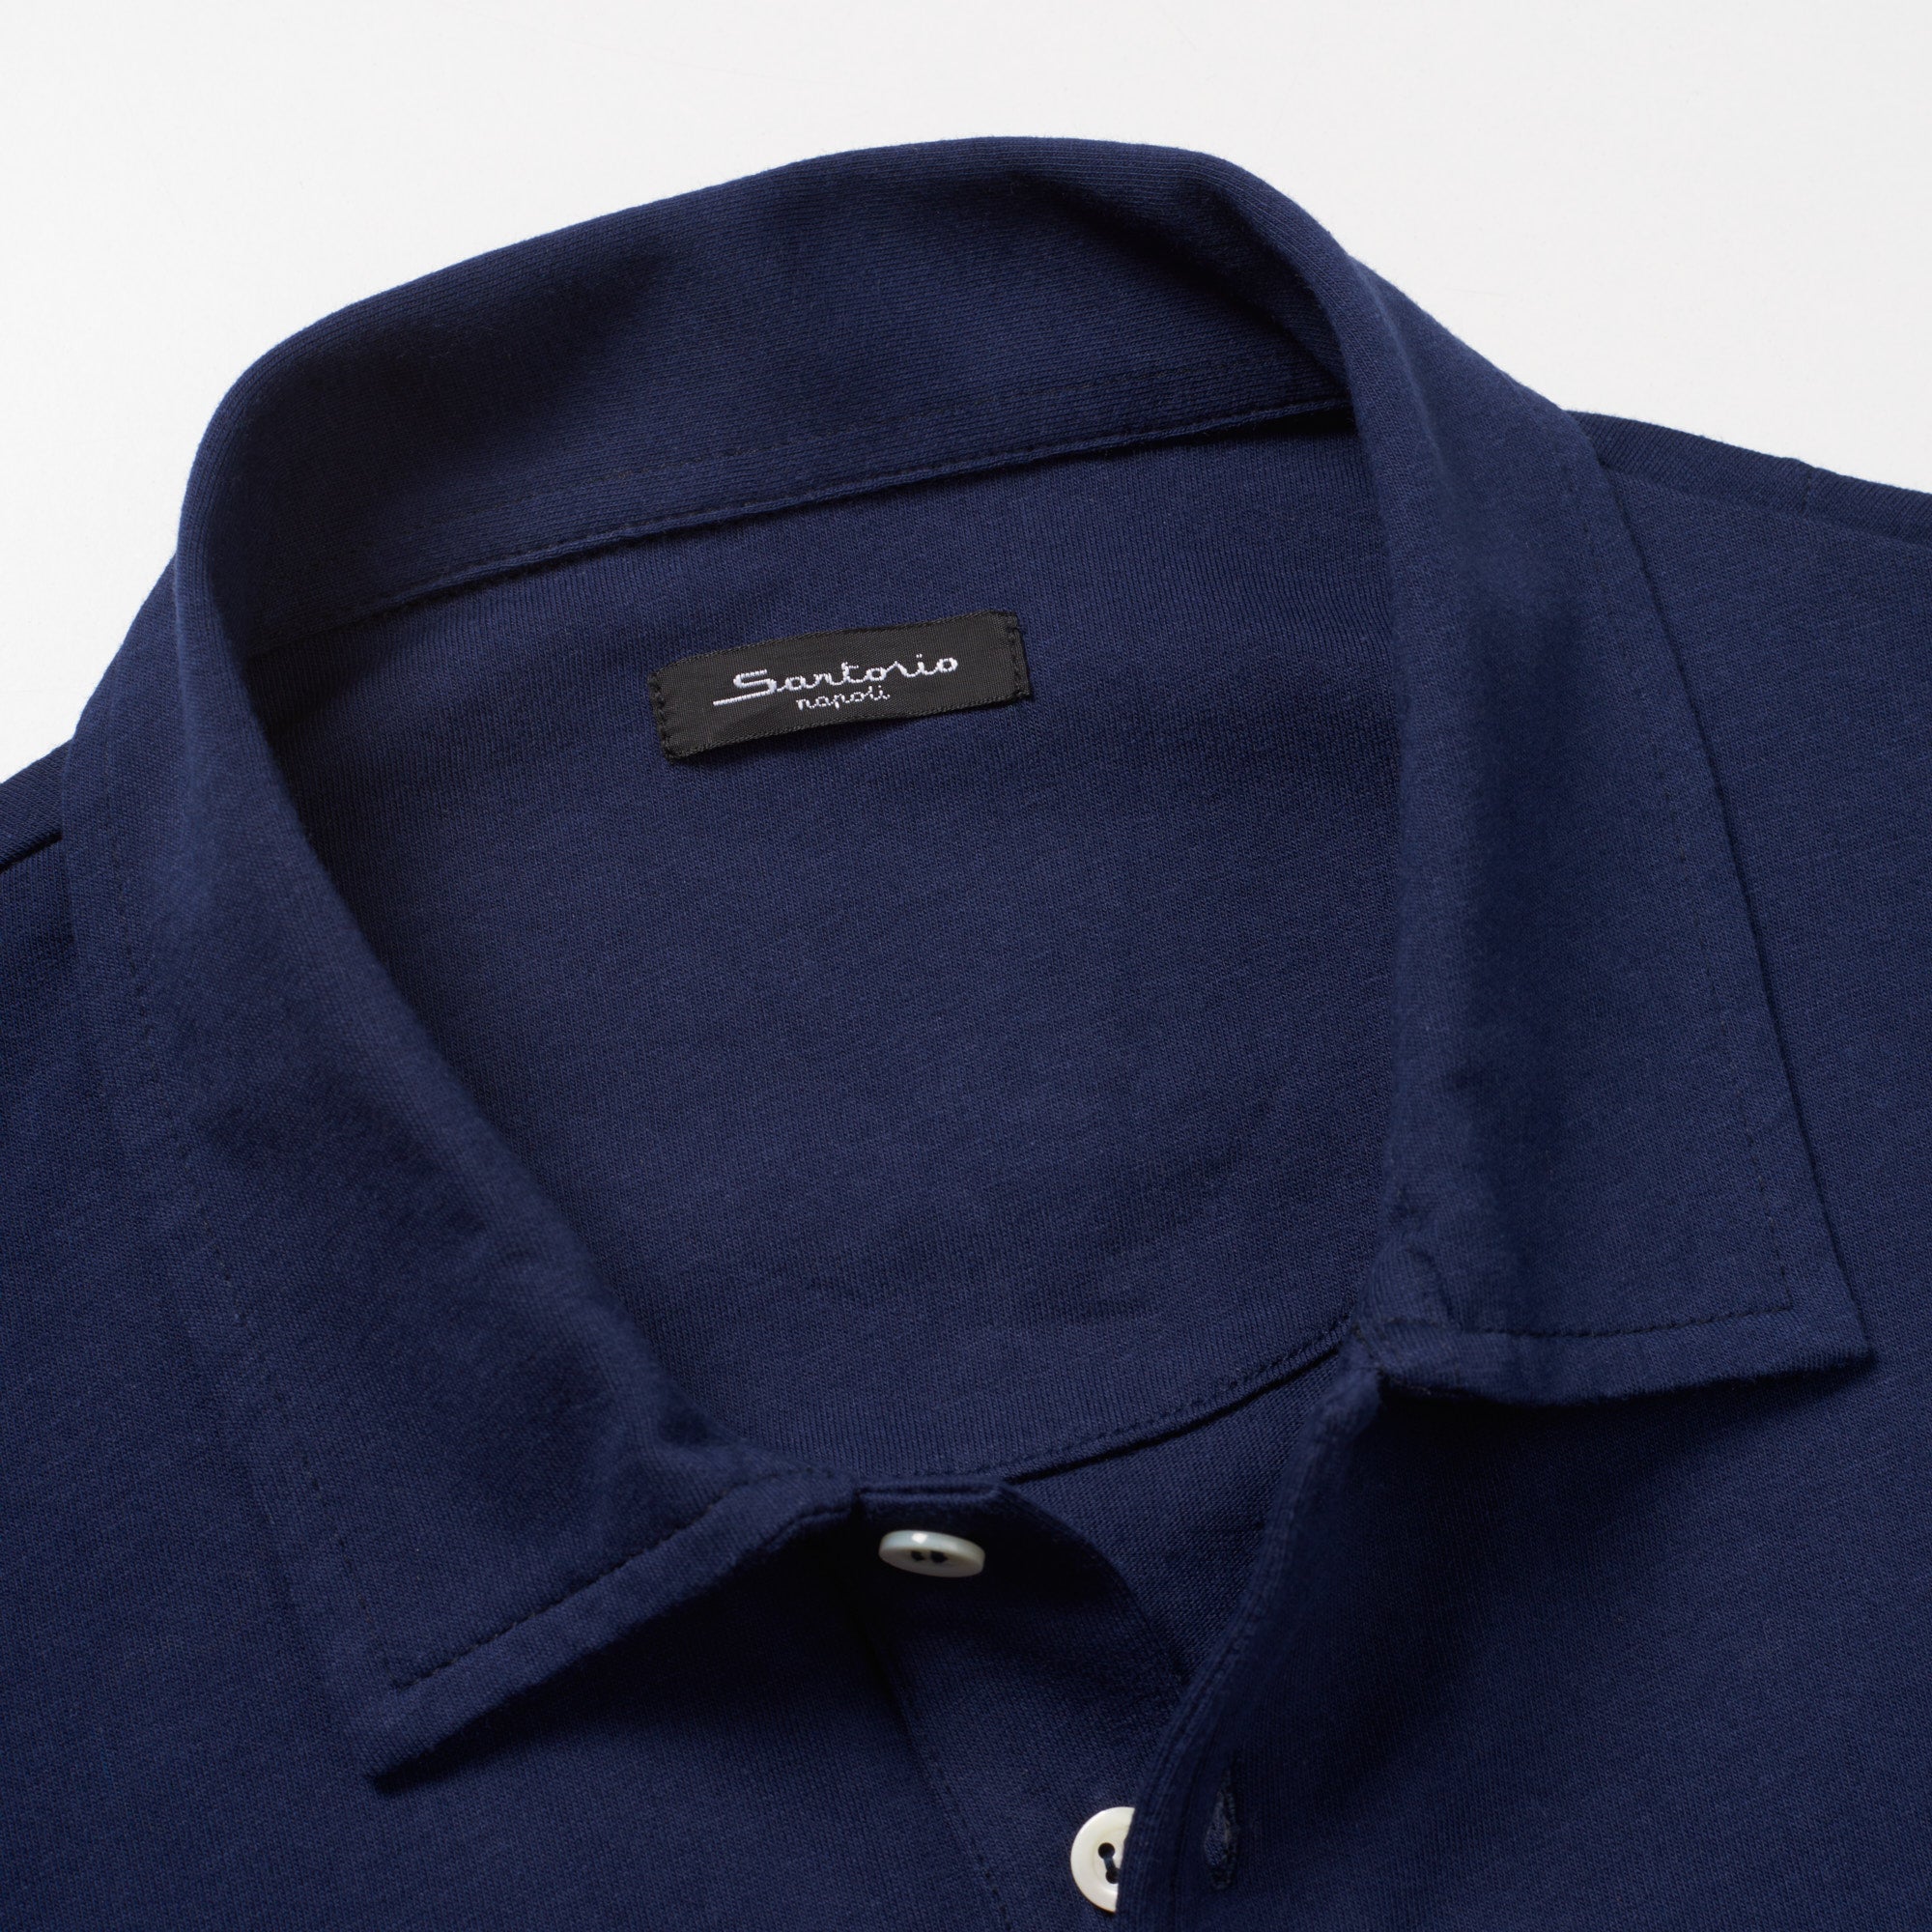 SARTORIO Napoli by KITON Navy Blue Cotton Jersey Short Sleeve Polo Shirt NEW SARTORIO